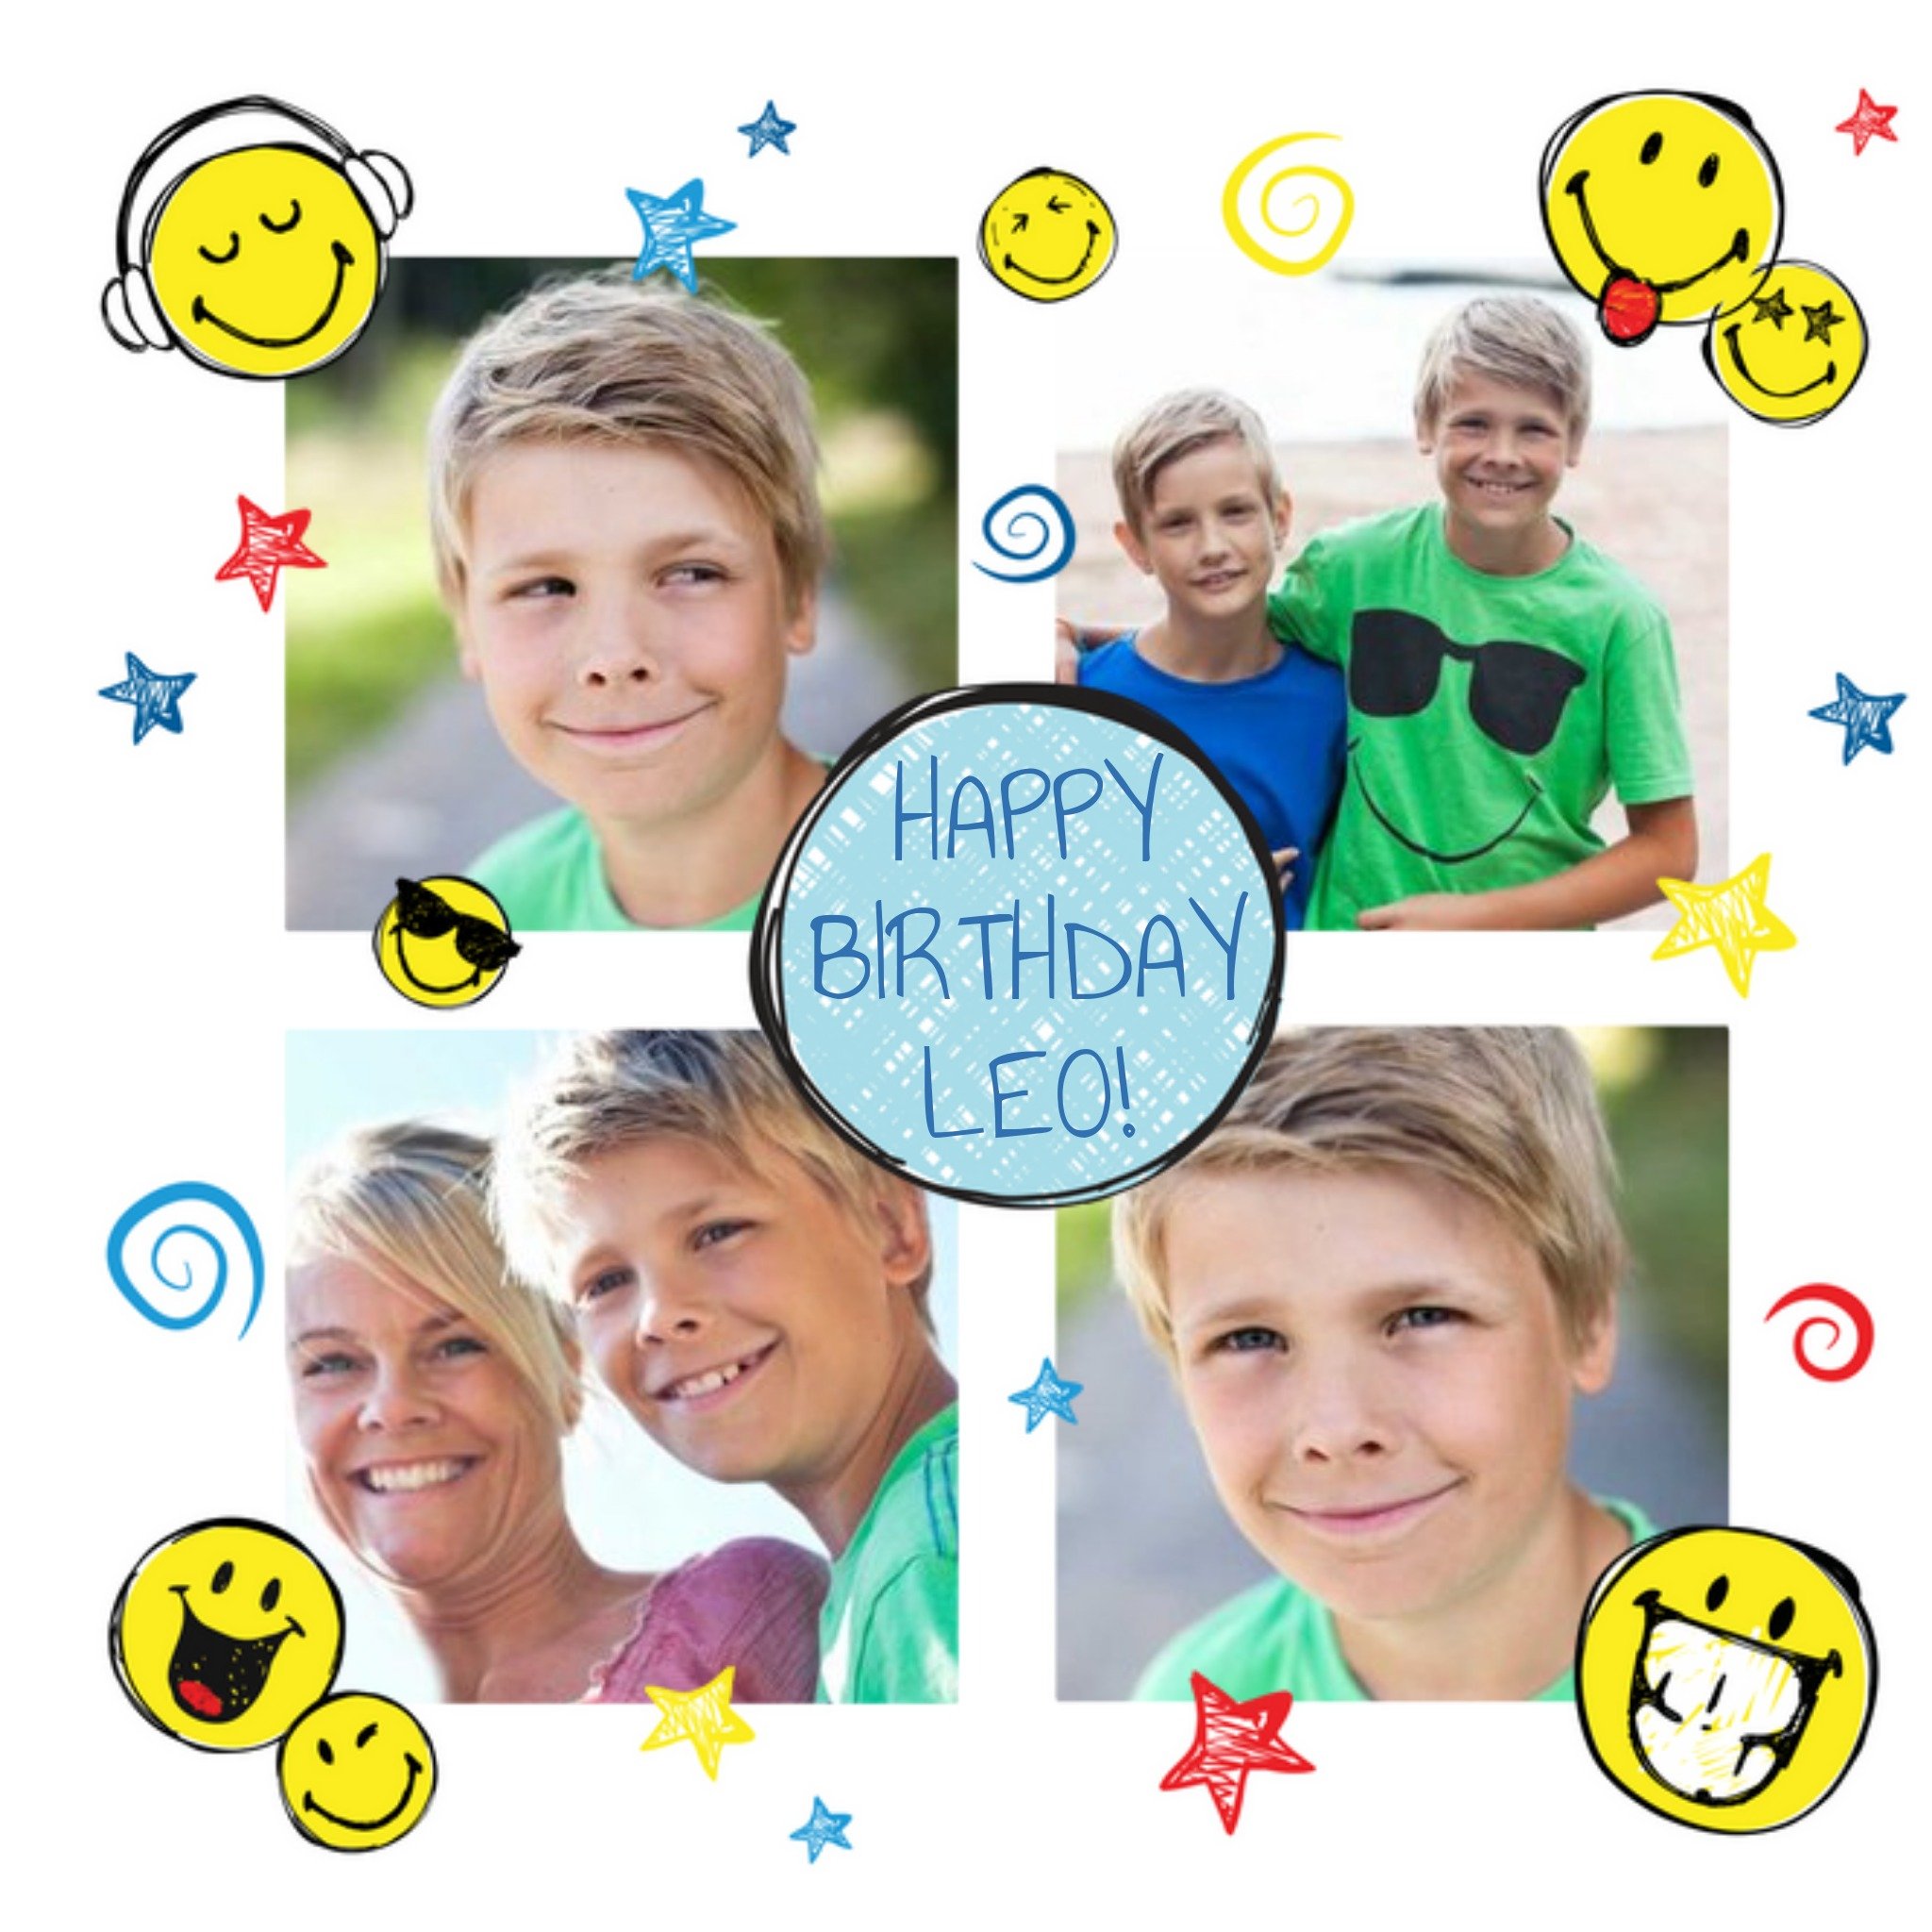 Other Smiley World Mutli Photo Upload Happy Birthday Card, Large